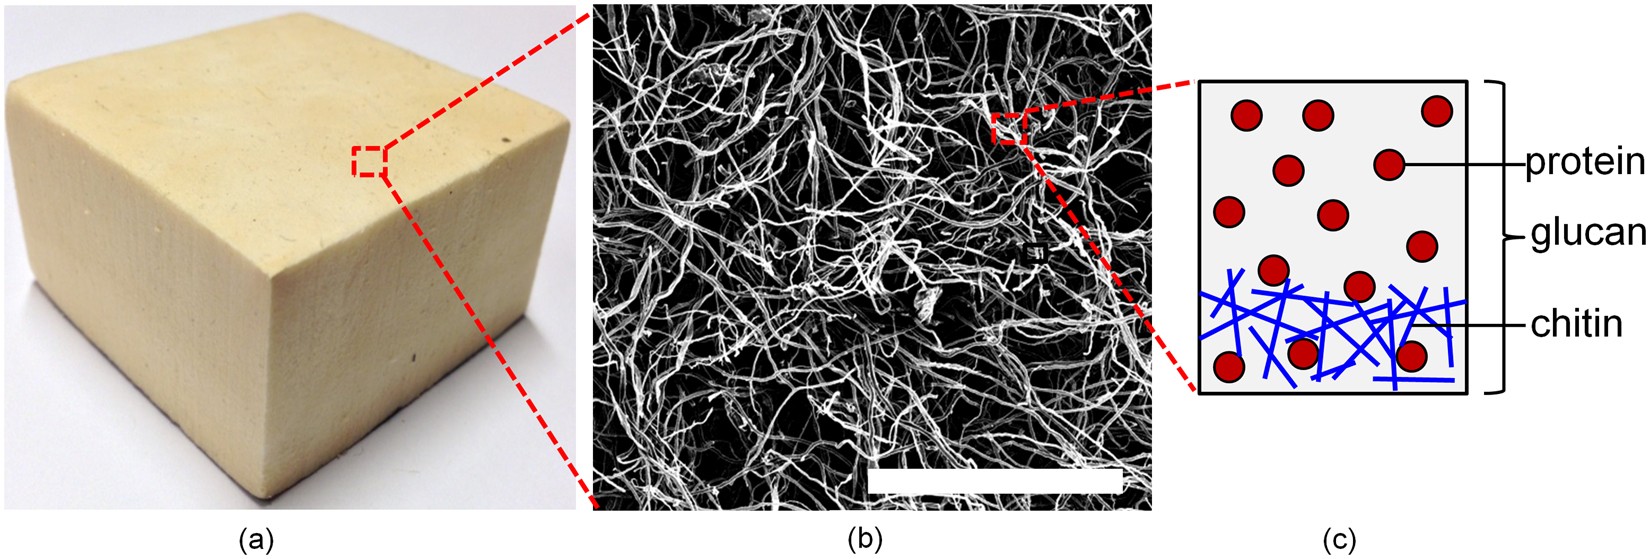 Morphology and mechanics of fungal mycelium